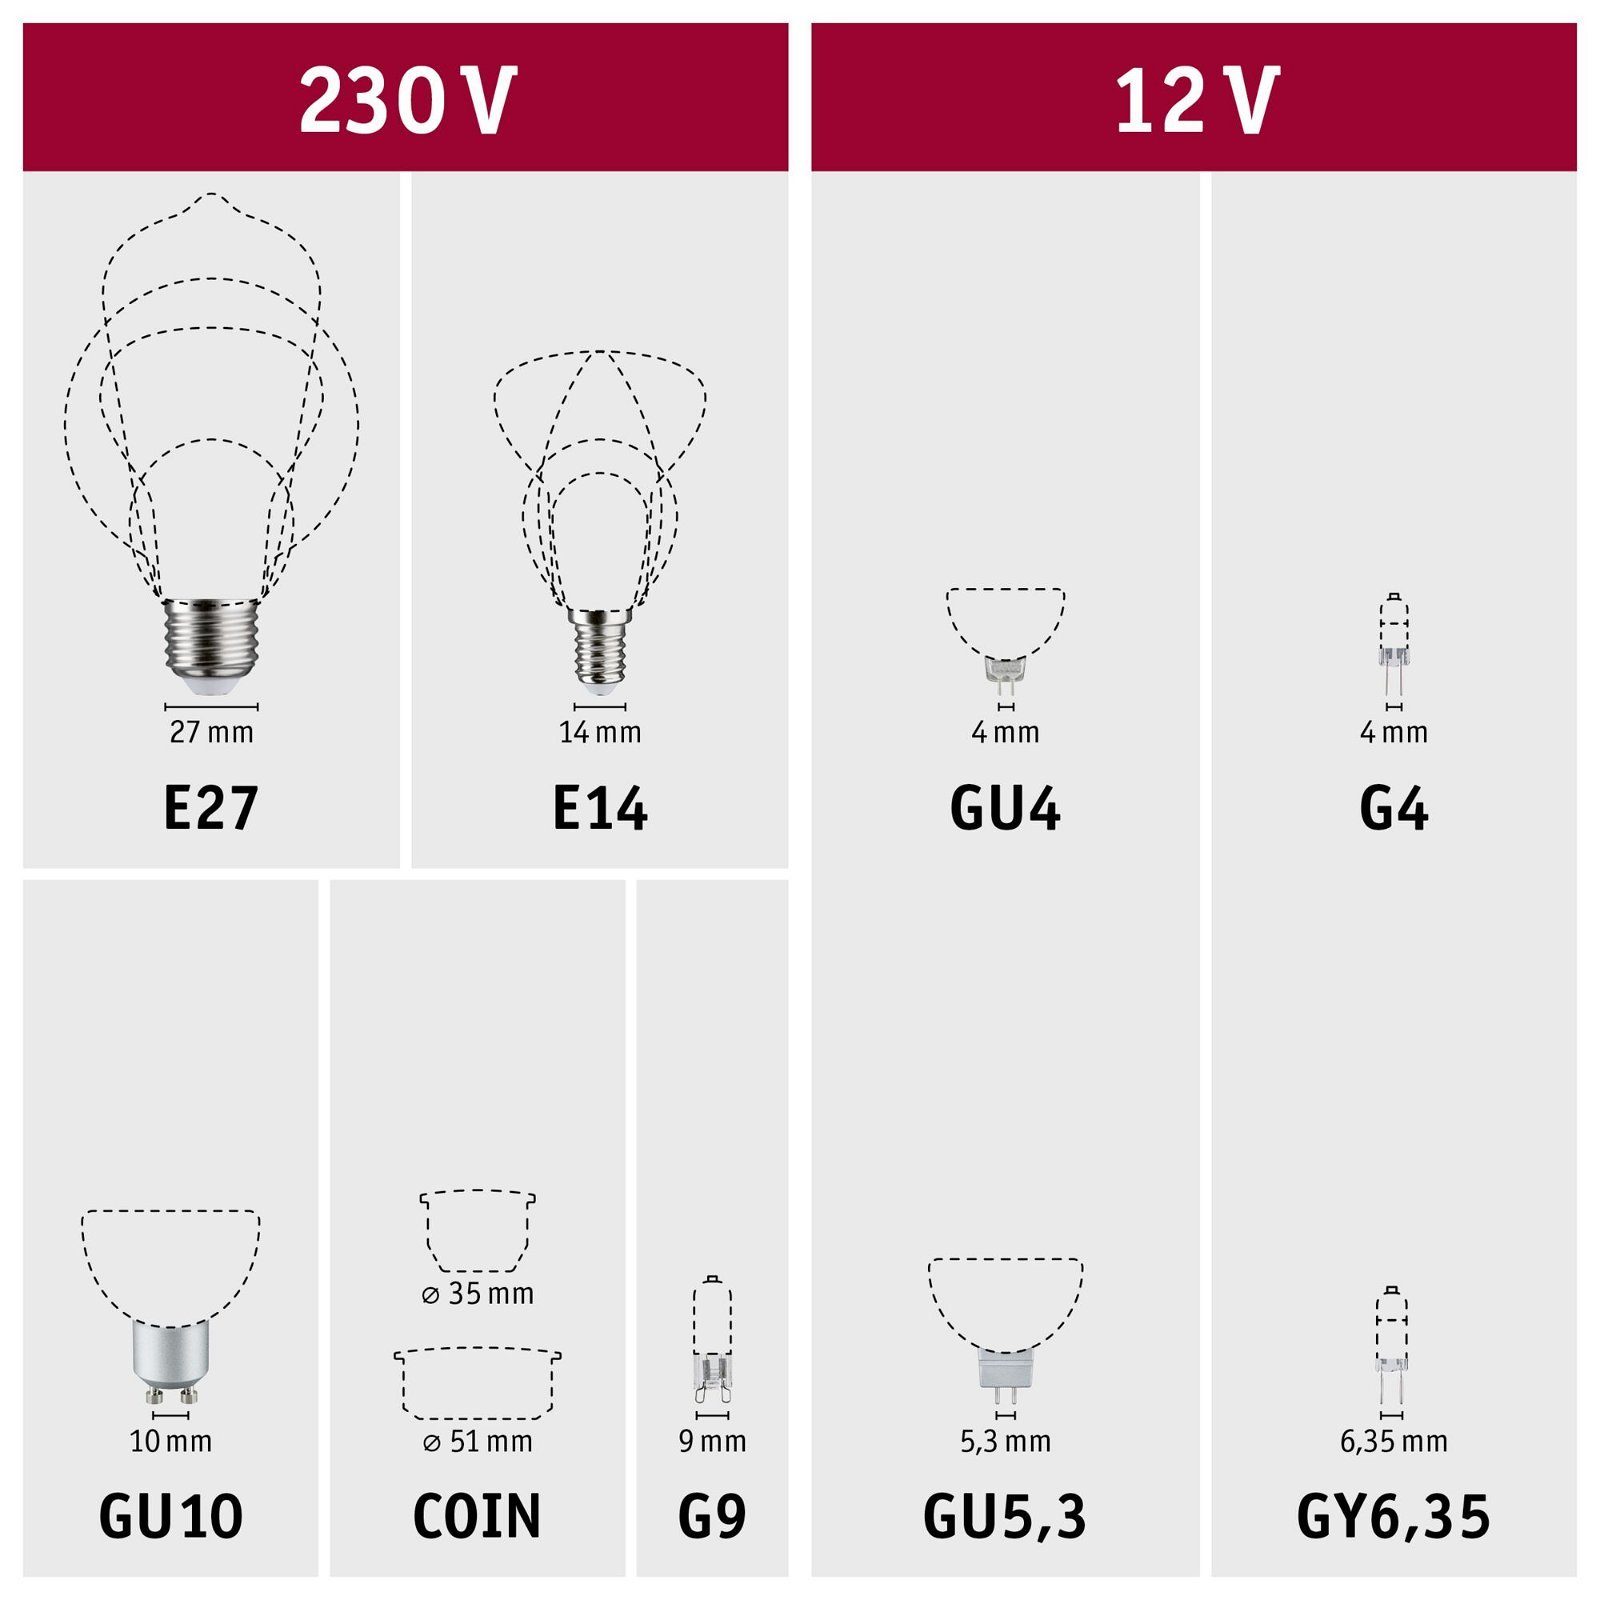 Paulmann LED-Leuchtmittel Metallic Glow Globe 4,2W 200lm messing Spiral 230V 1800K